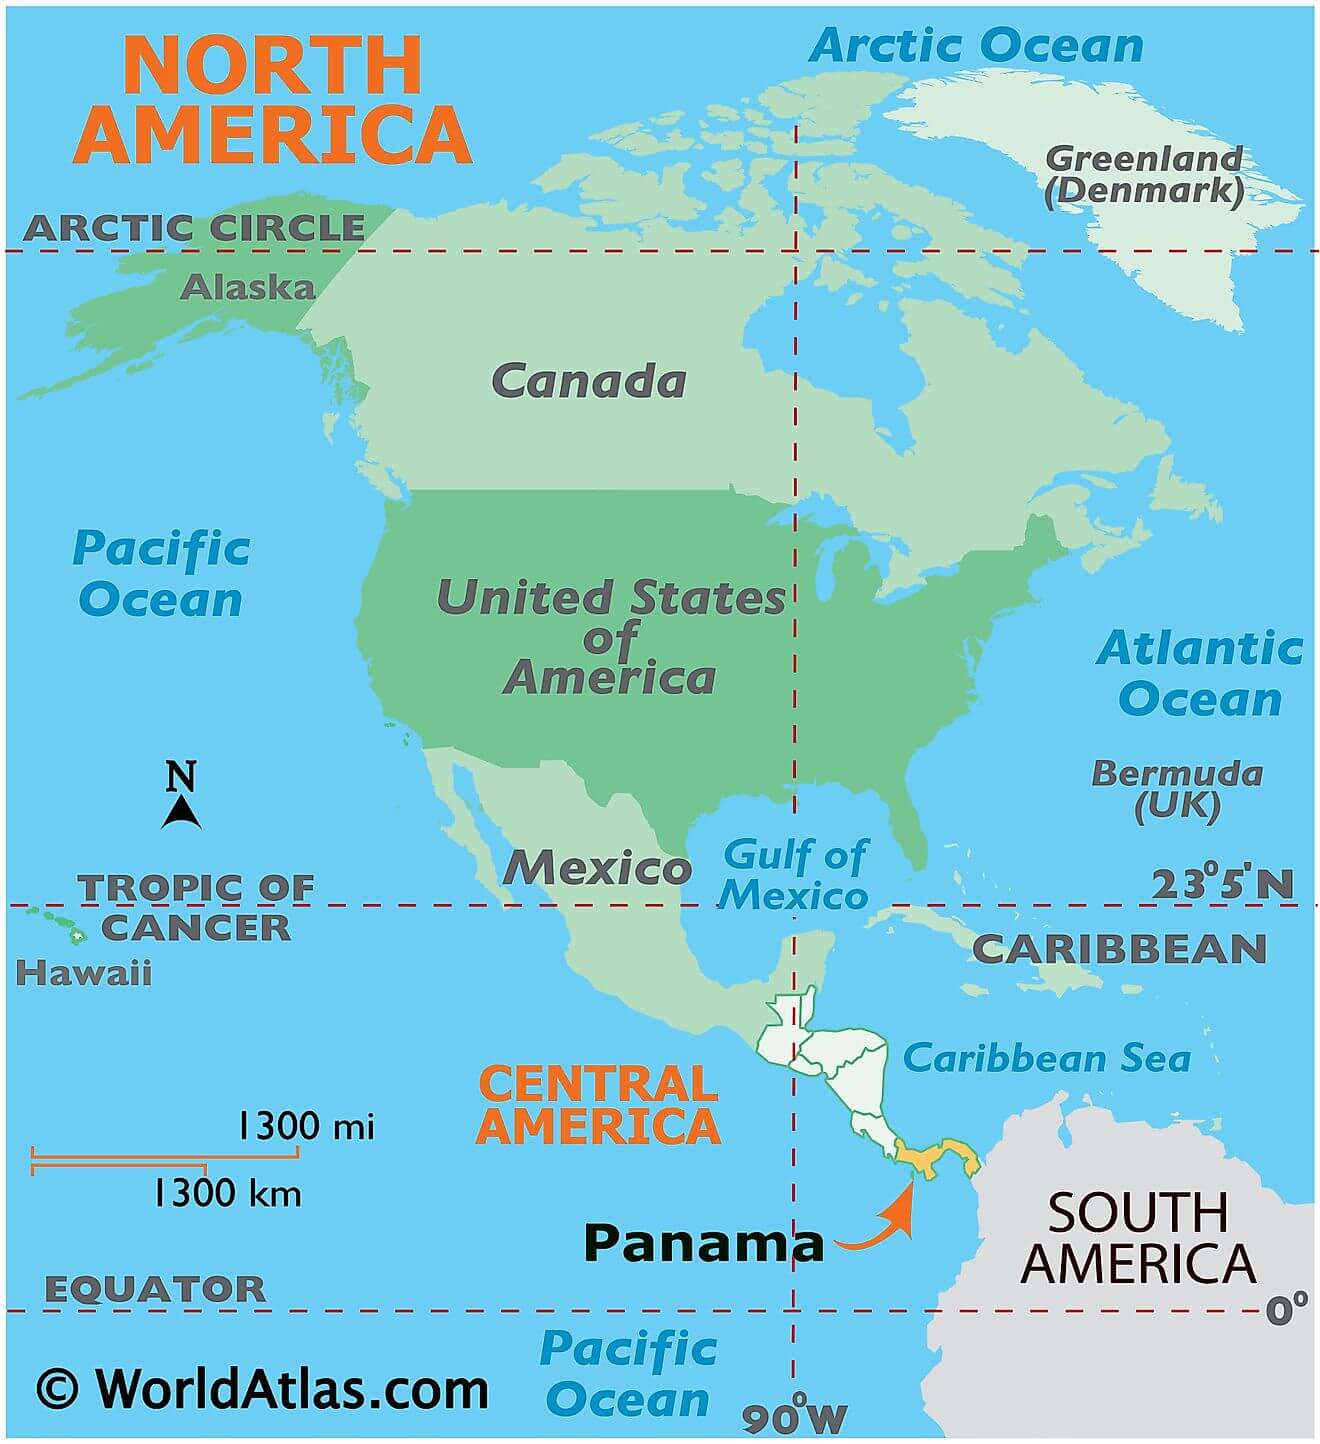 Where is Panama?